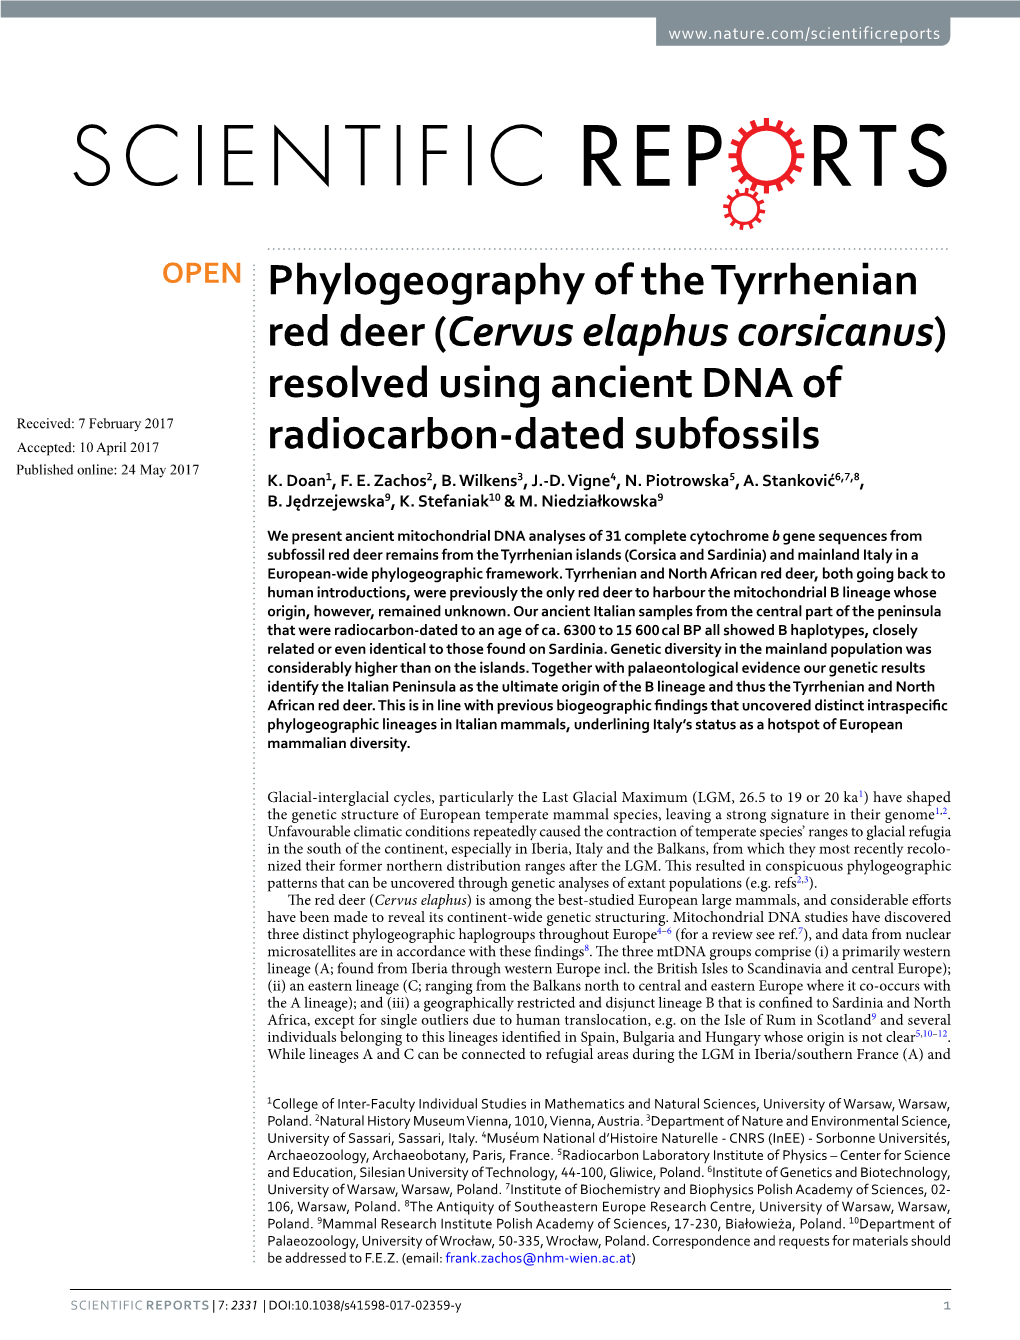 Phylogeography of the Tyrrhenian Red Deer (Cervus Elaphus